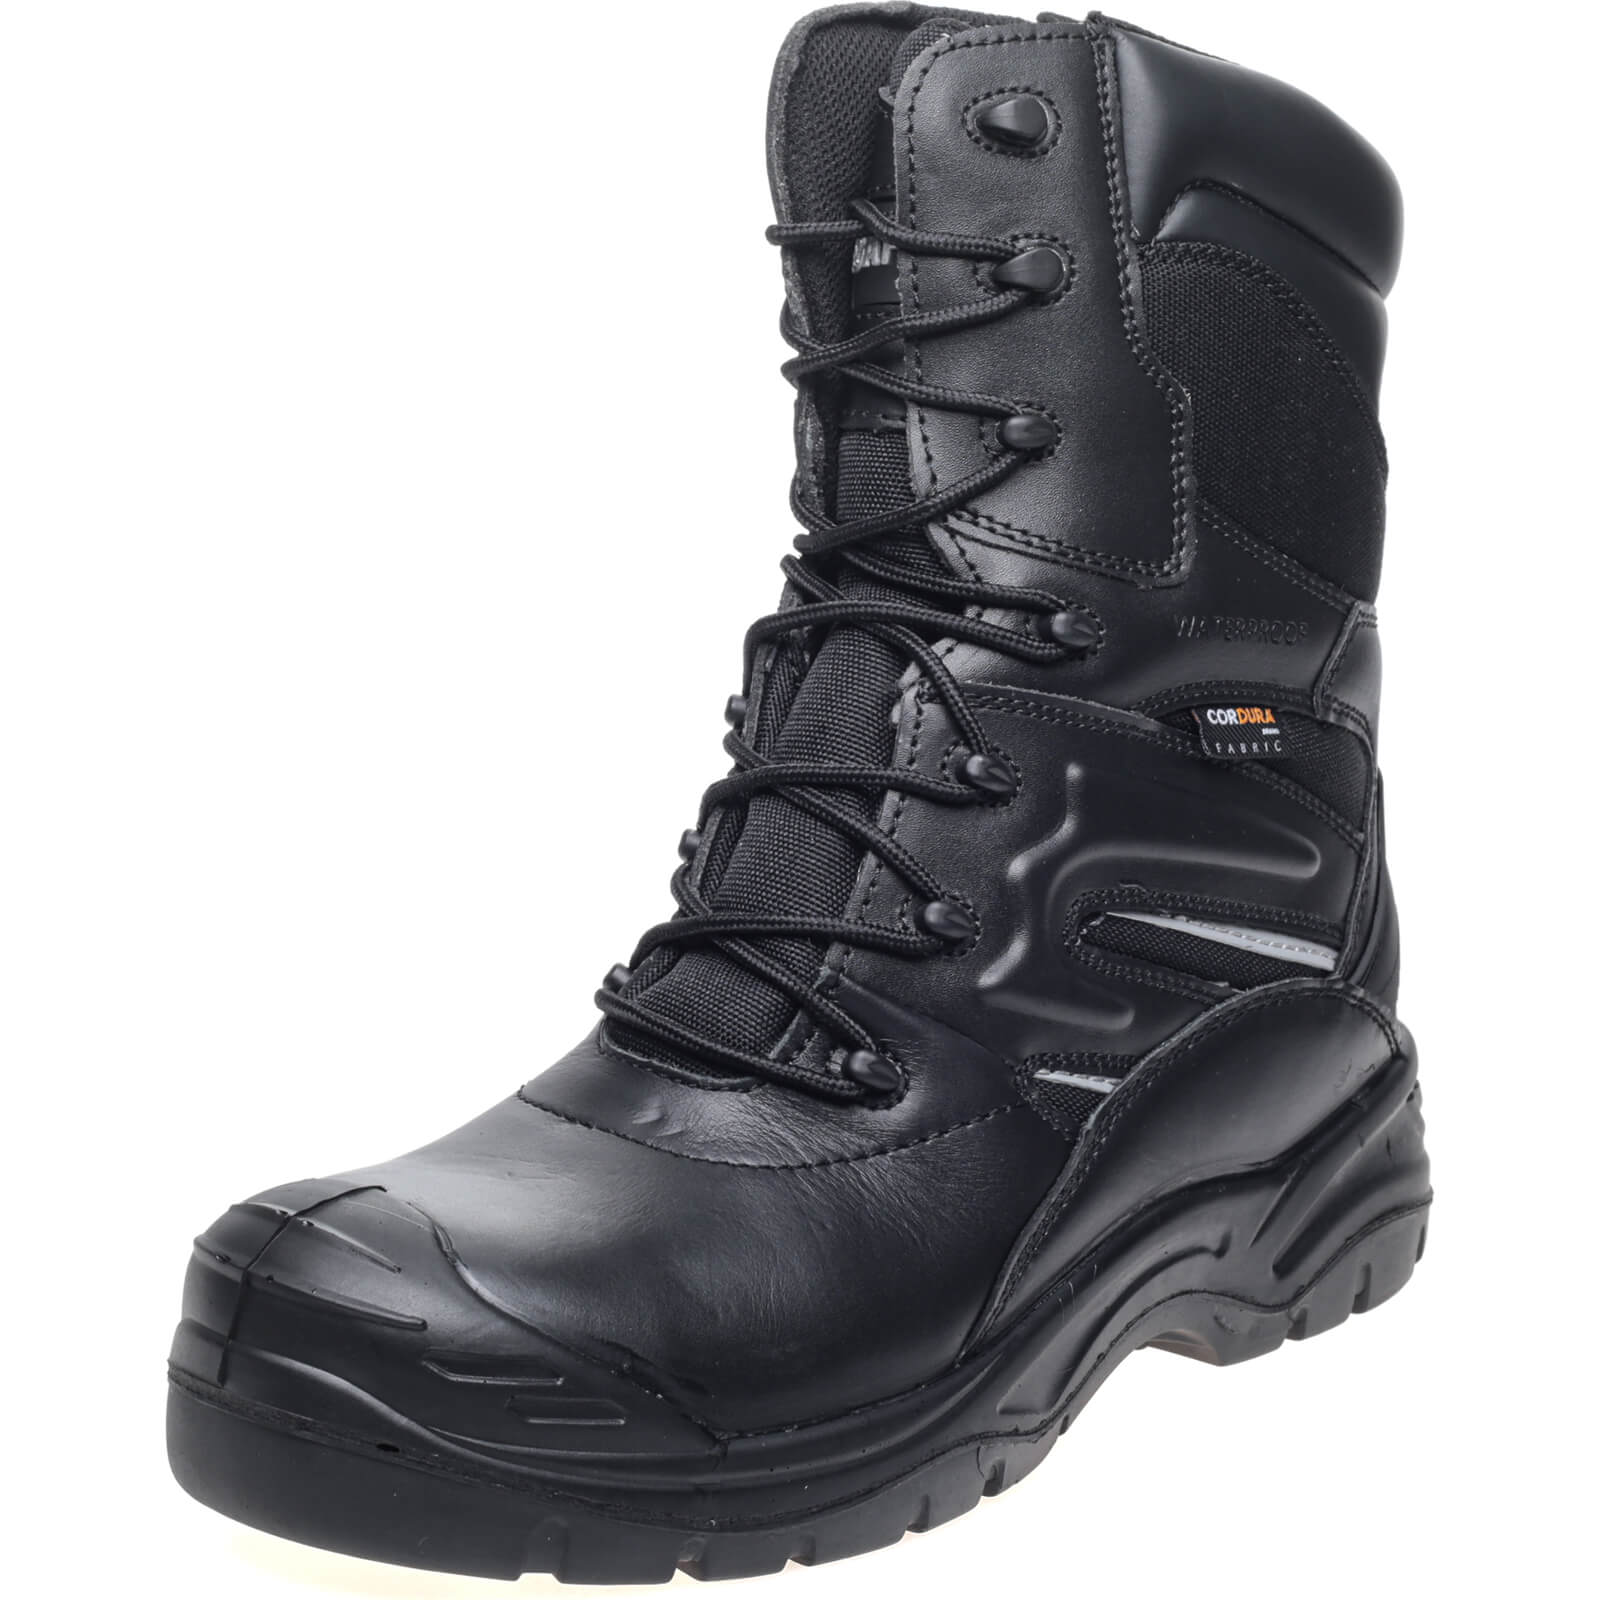 Image of Apache COMBAT Non Metallic High Leg Safety Boots Black Size 7